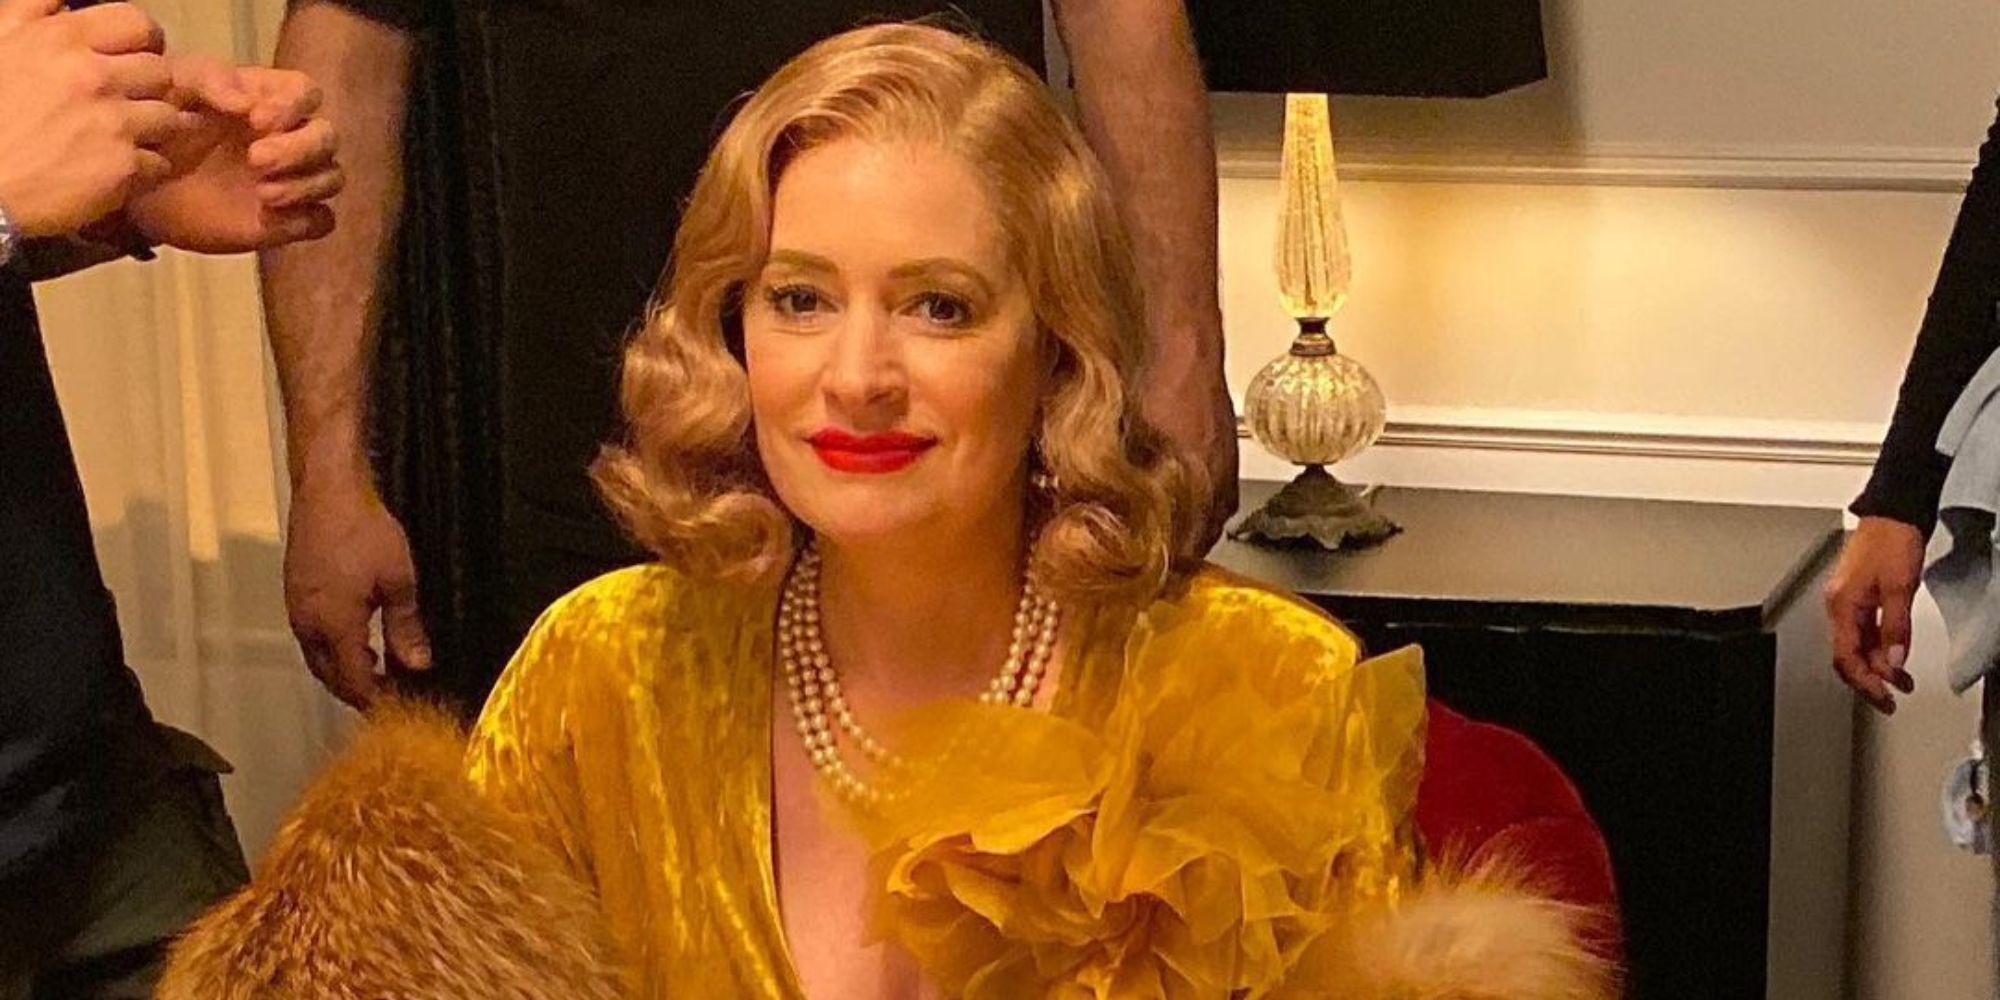 A blonde woman dress in golden era costume